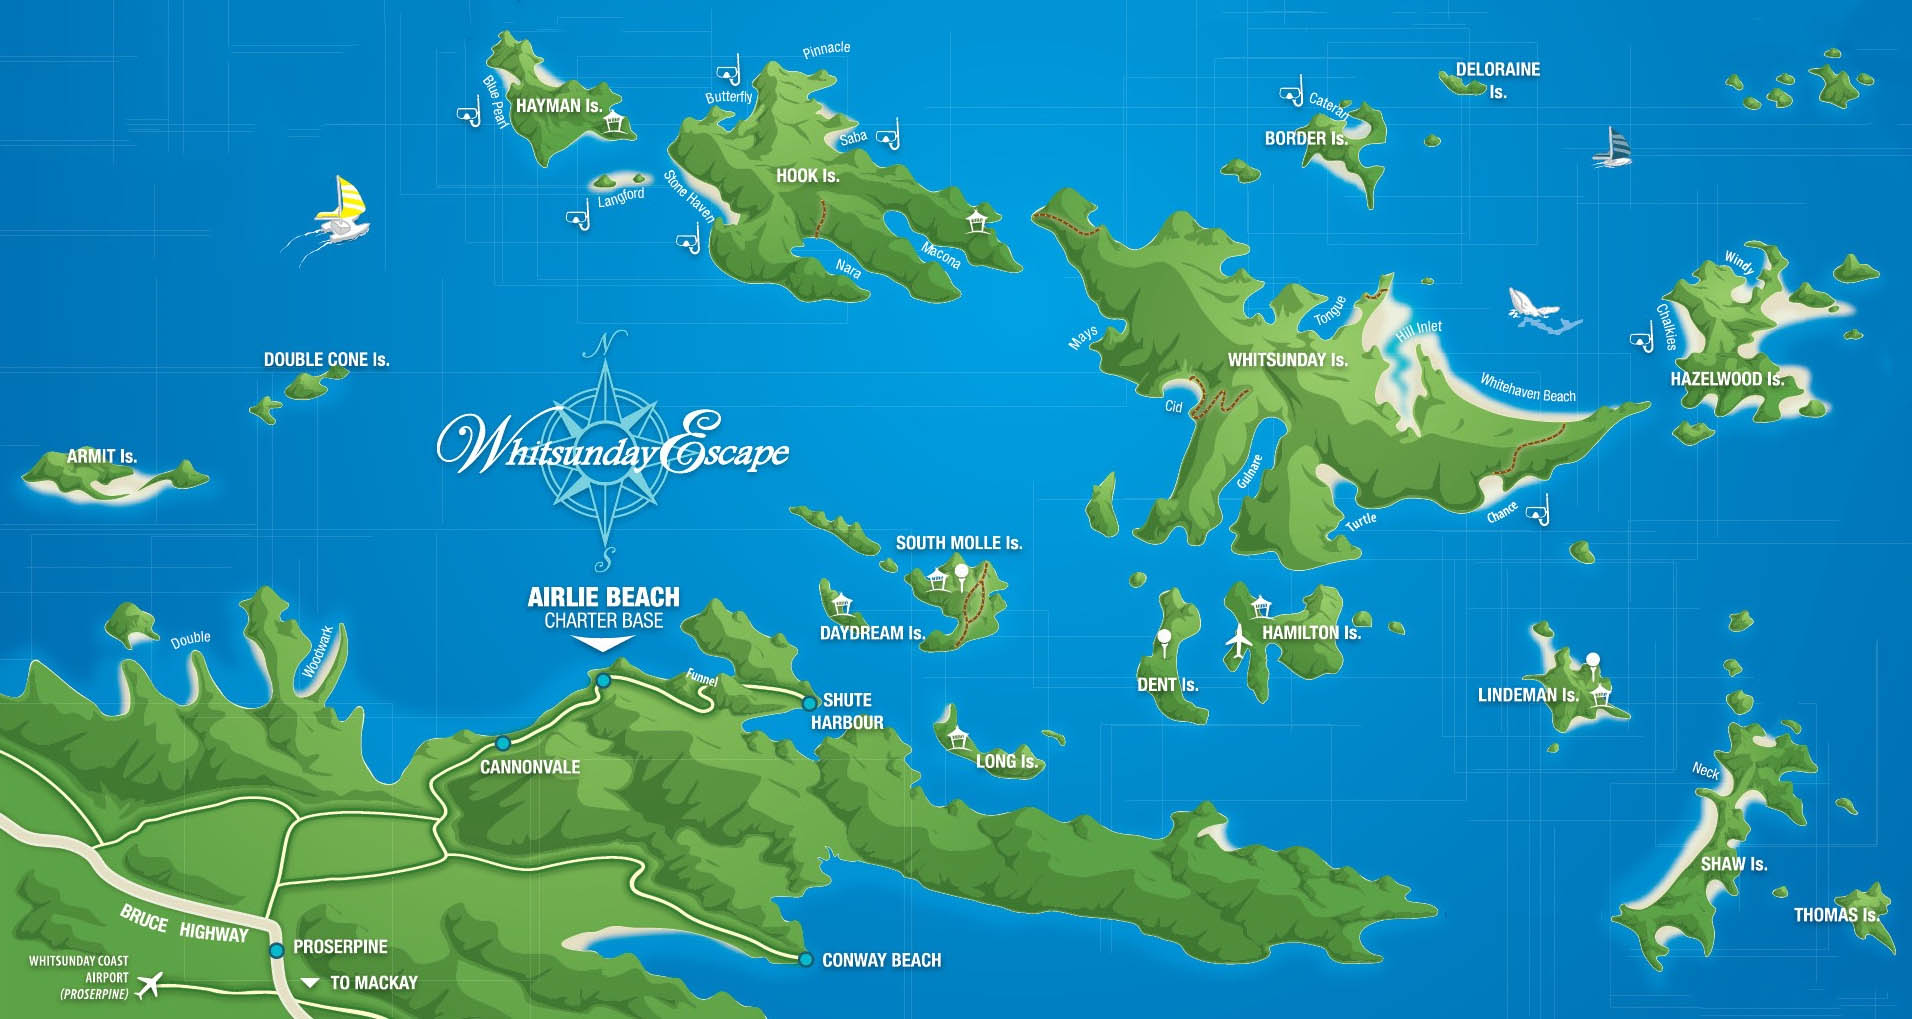 Whitsunday Escape has the largest cruising area for bareboats in the Whitsundays